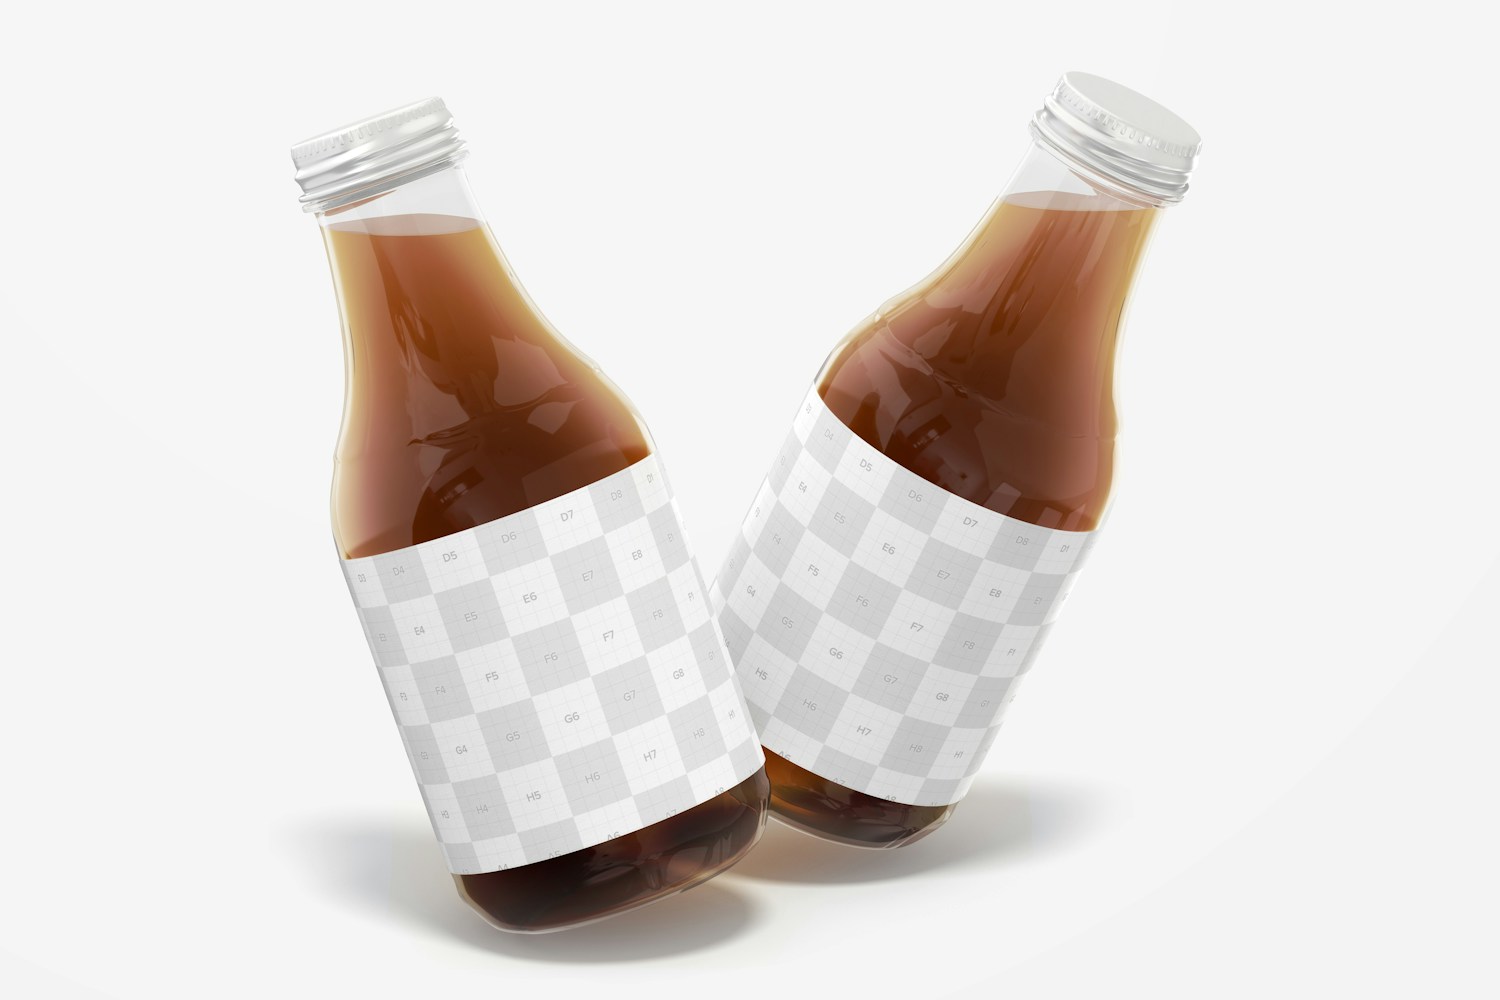 16 oz Glass Tea Bottles Mockup